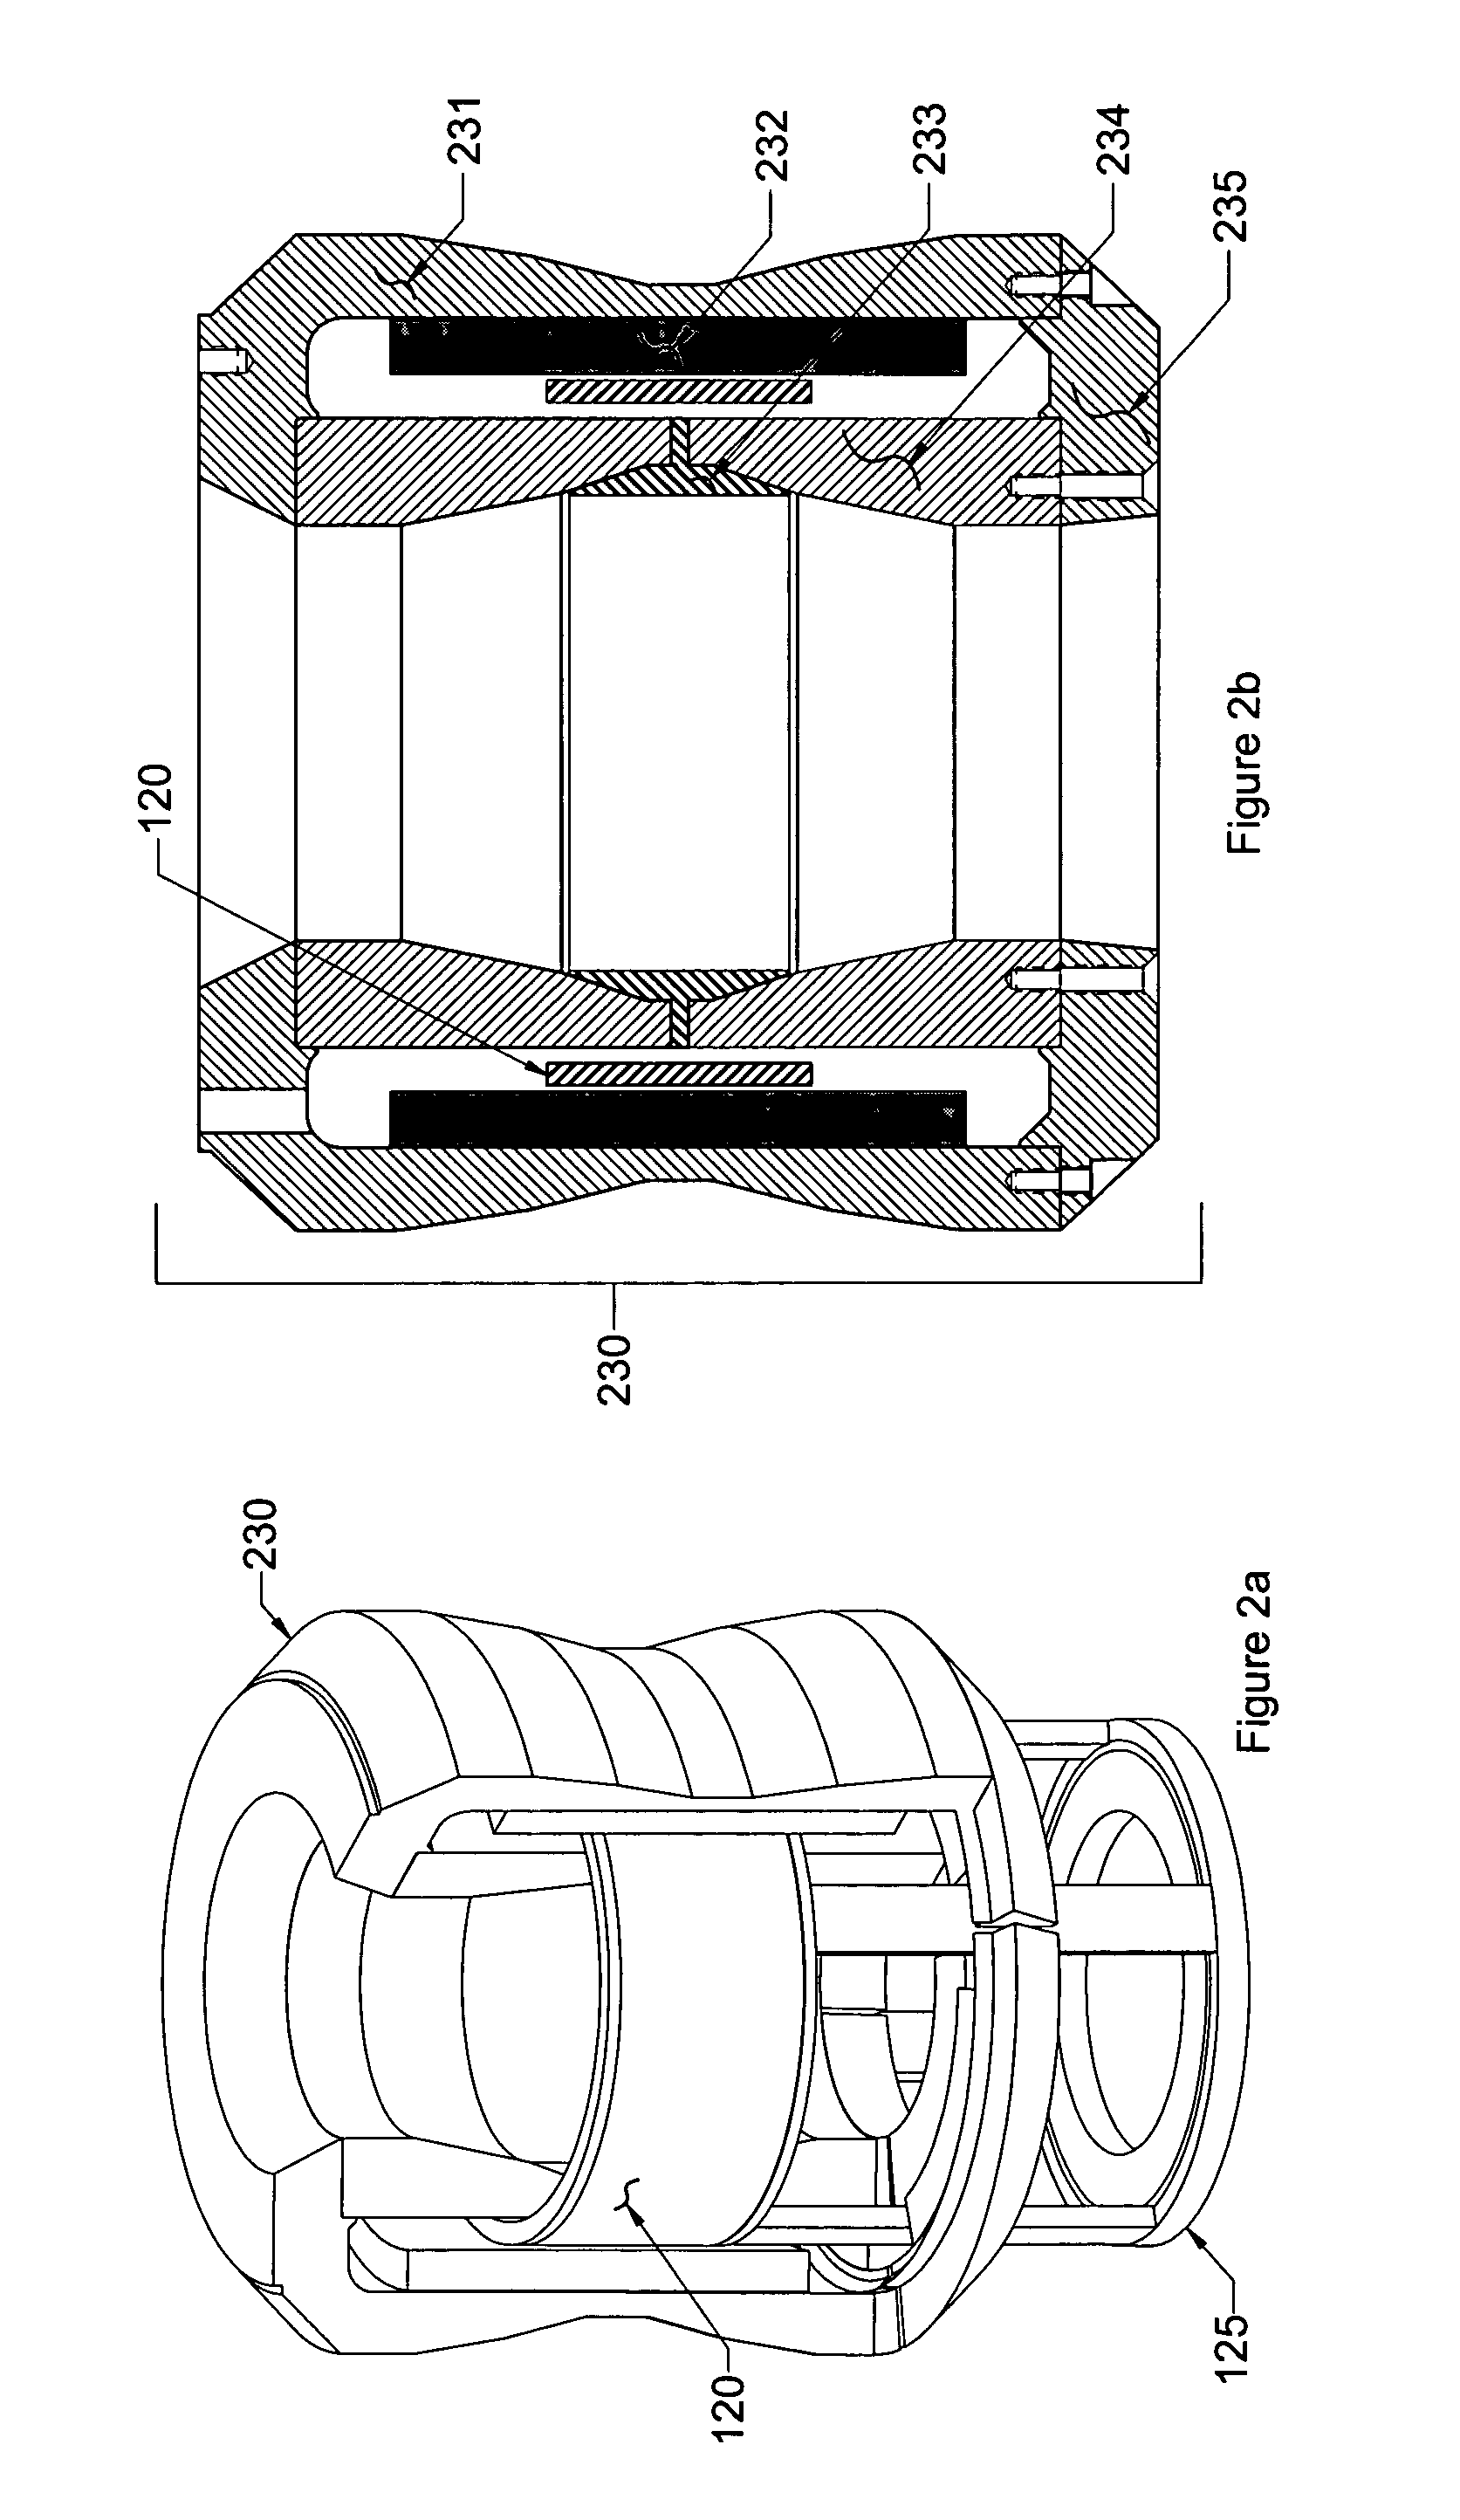 Hybrid pneumatic-magnetic isolator-actuator